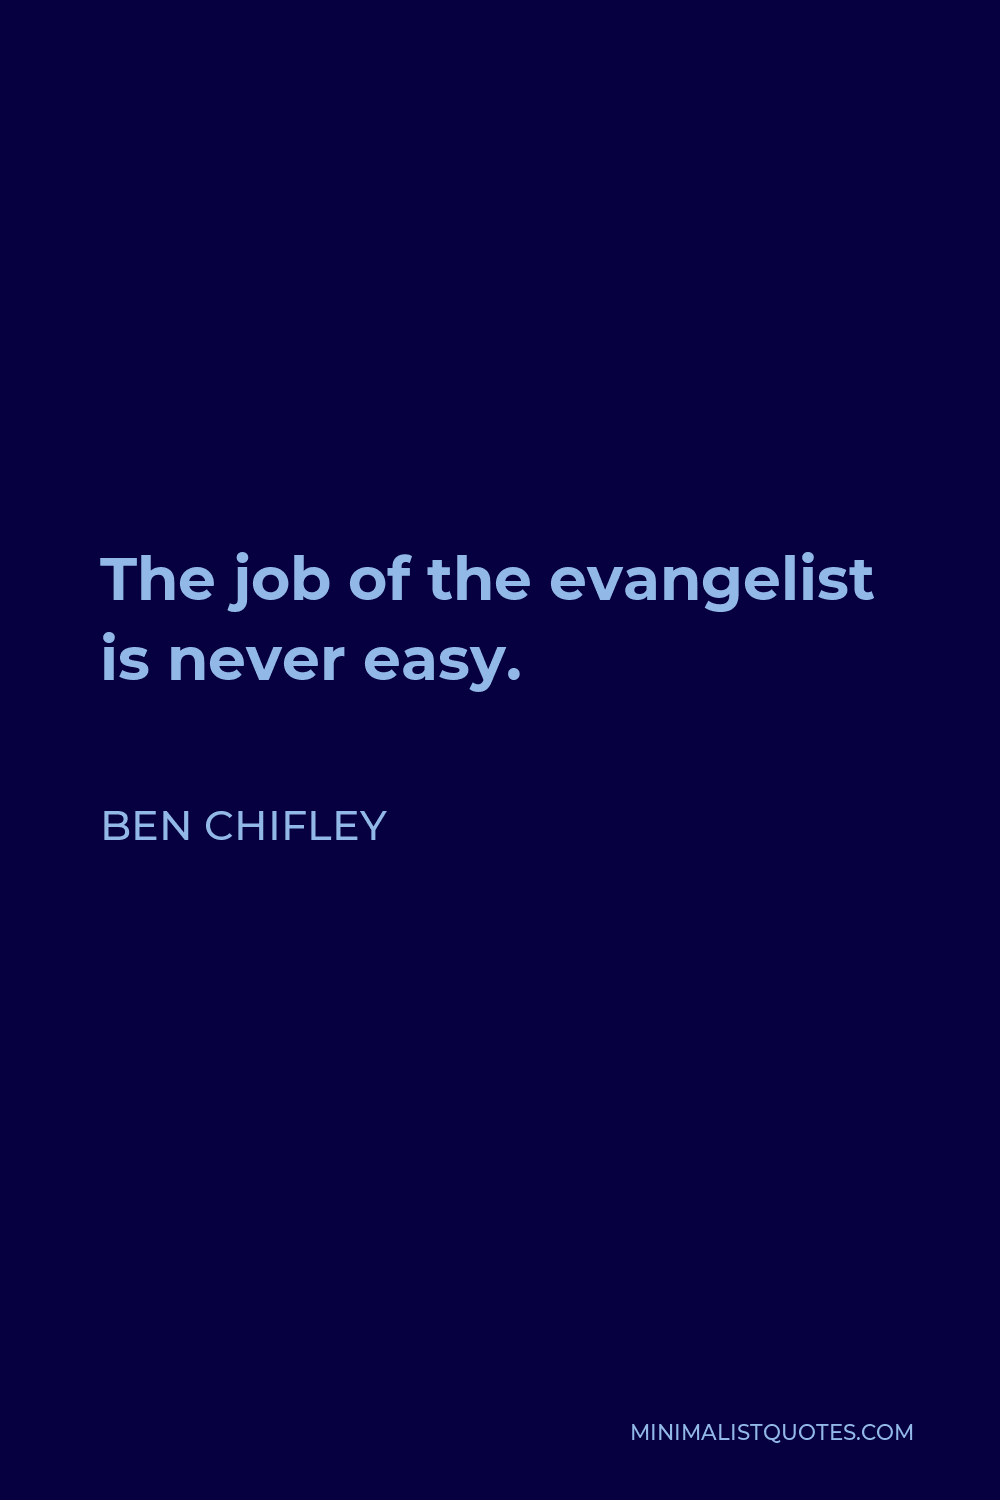 Ben Chifley Quote - The job of the evangelist is never easy.